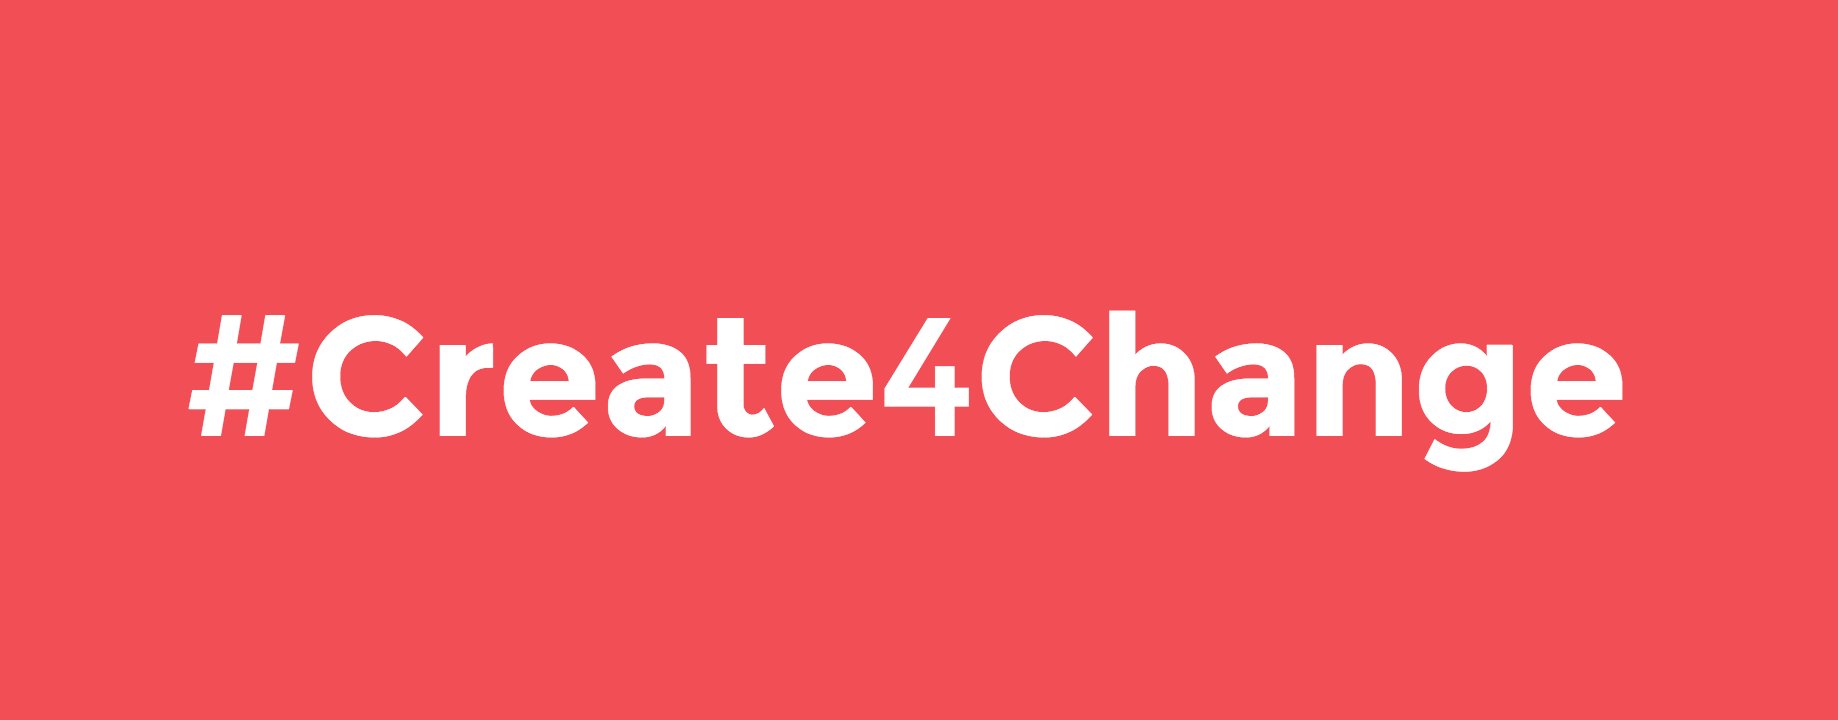 Create4Change